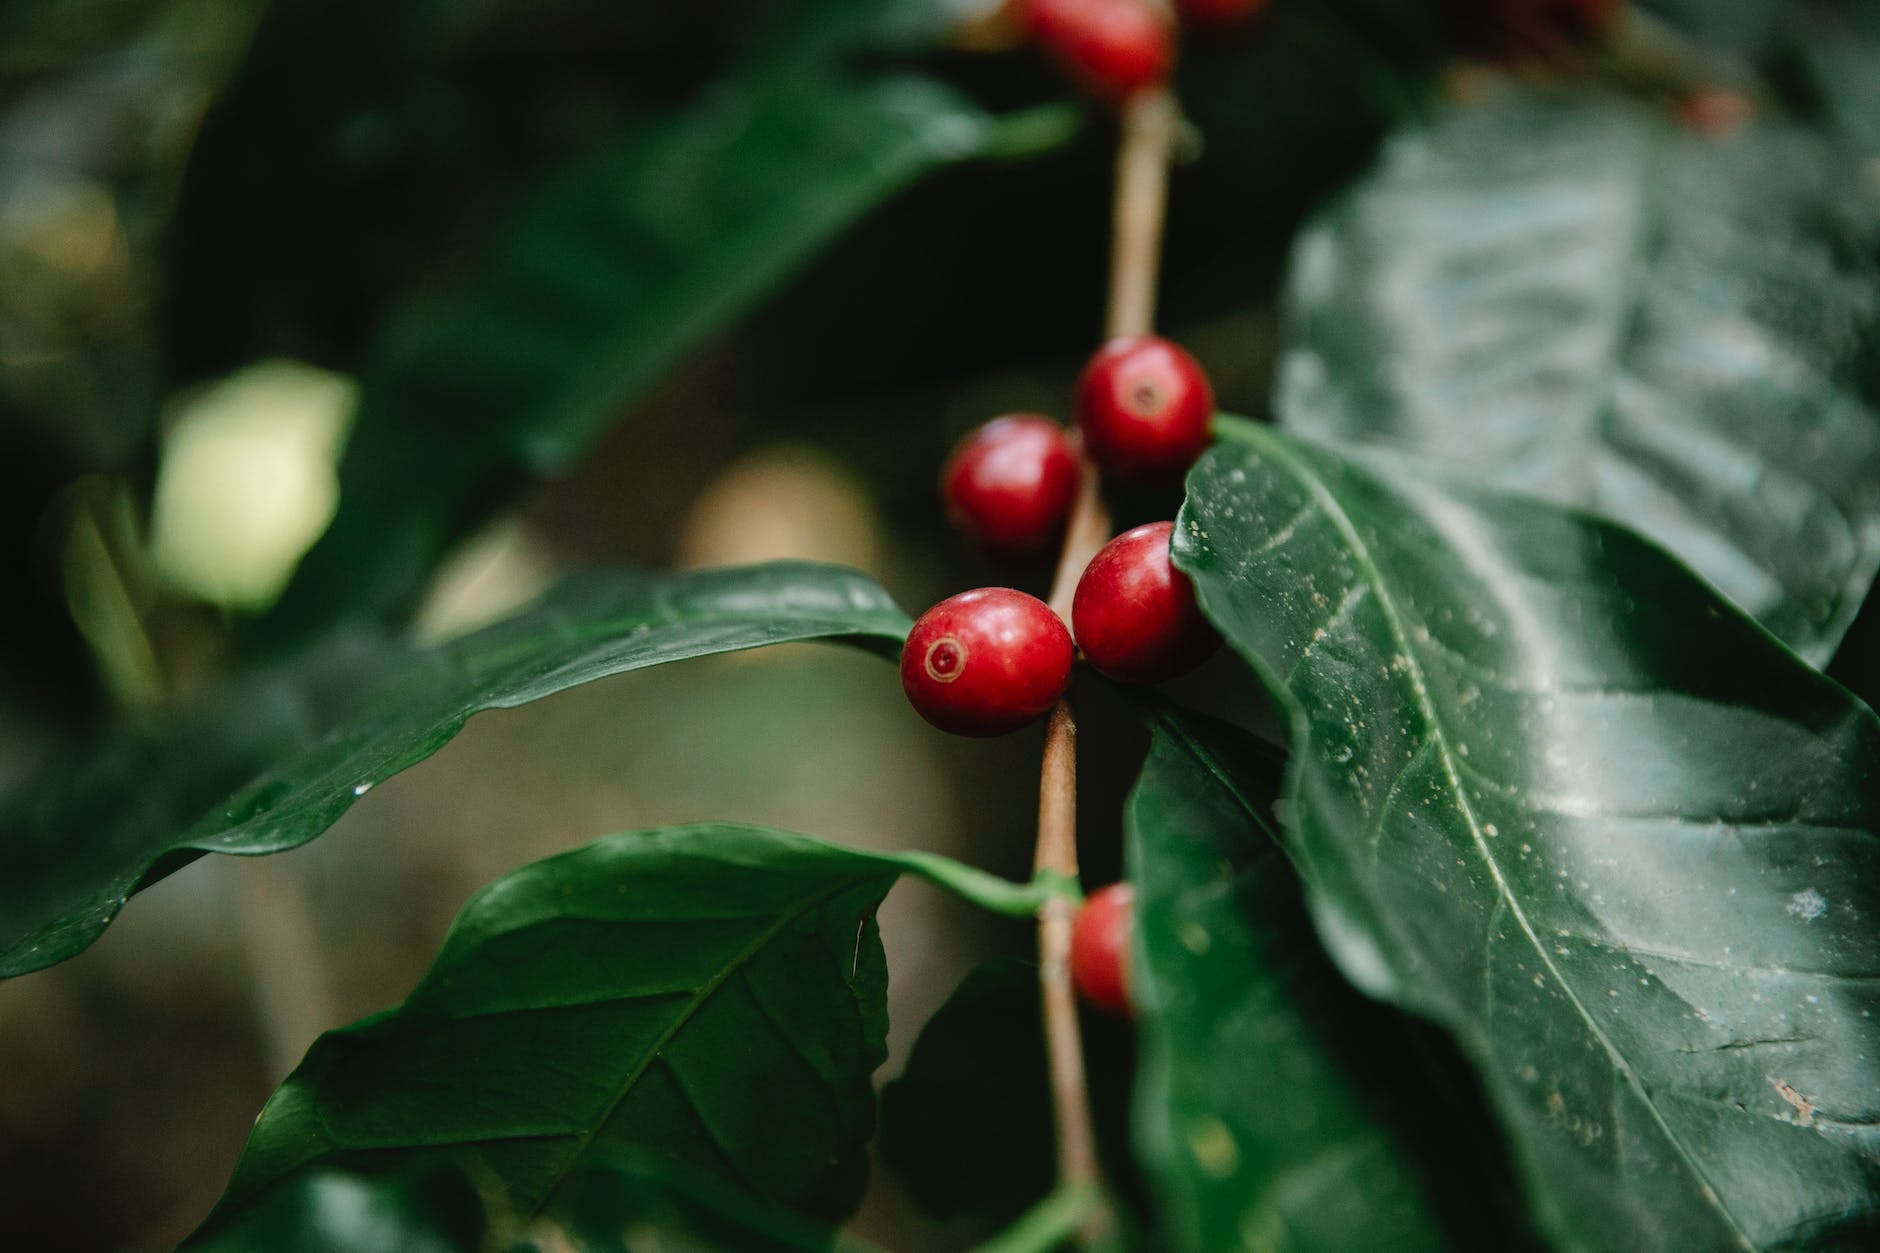 red coffee berries growing on tree branch